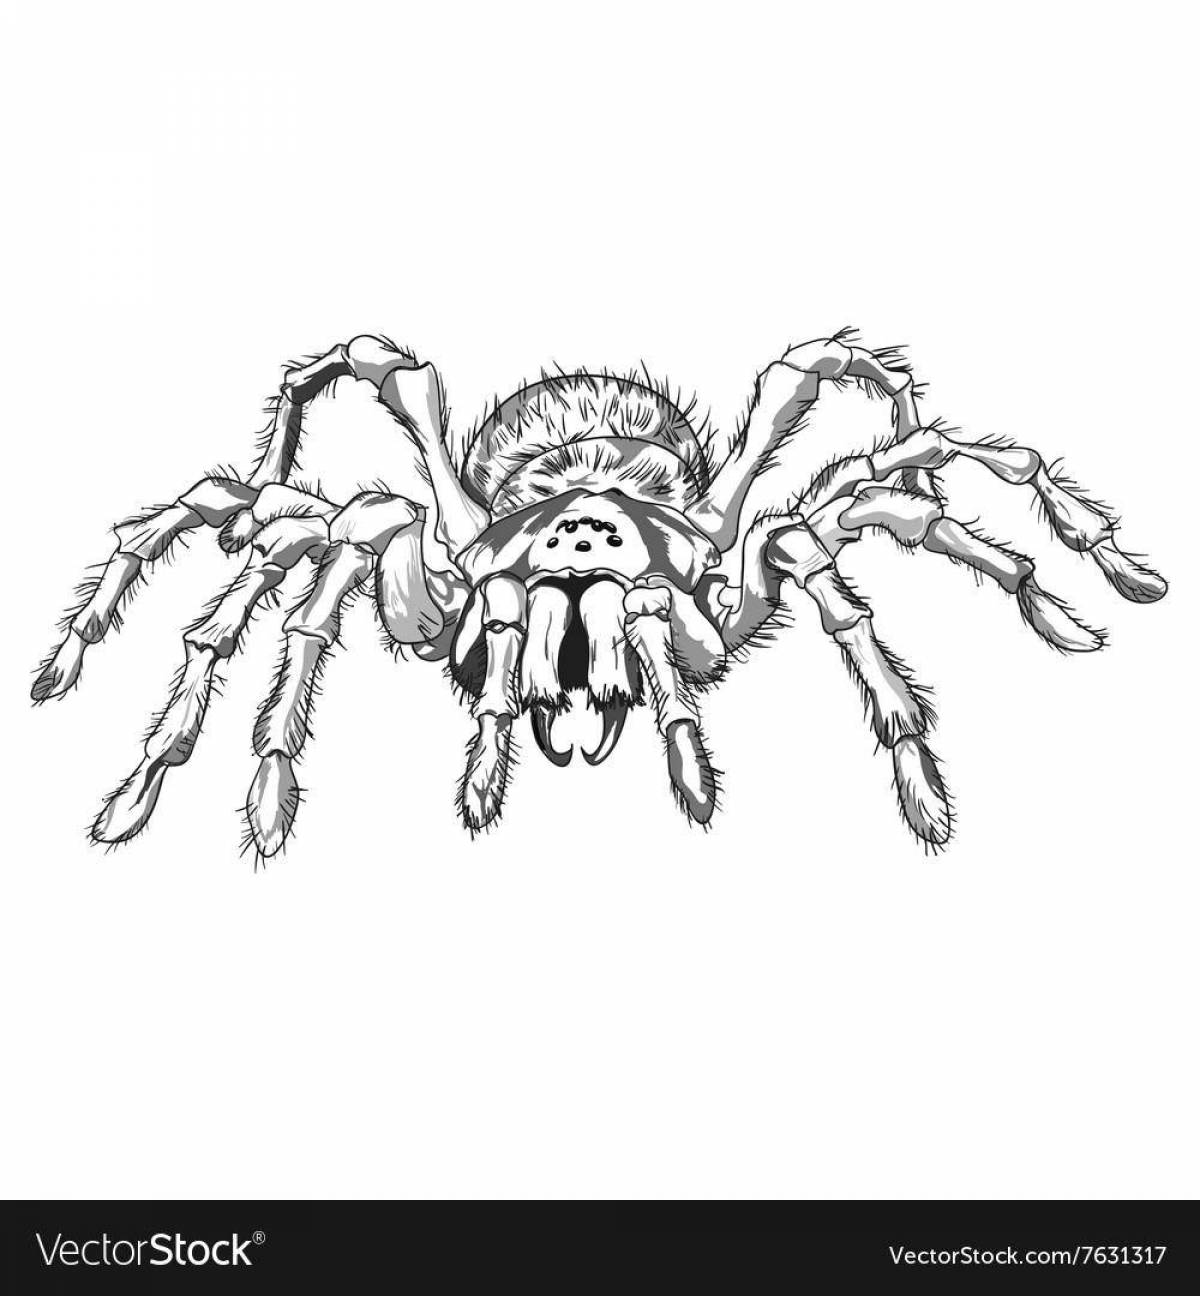 Realistic tarantula spider coloring page